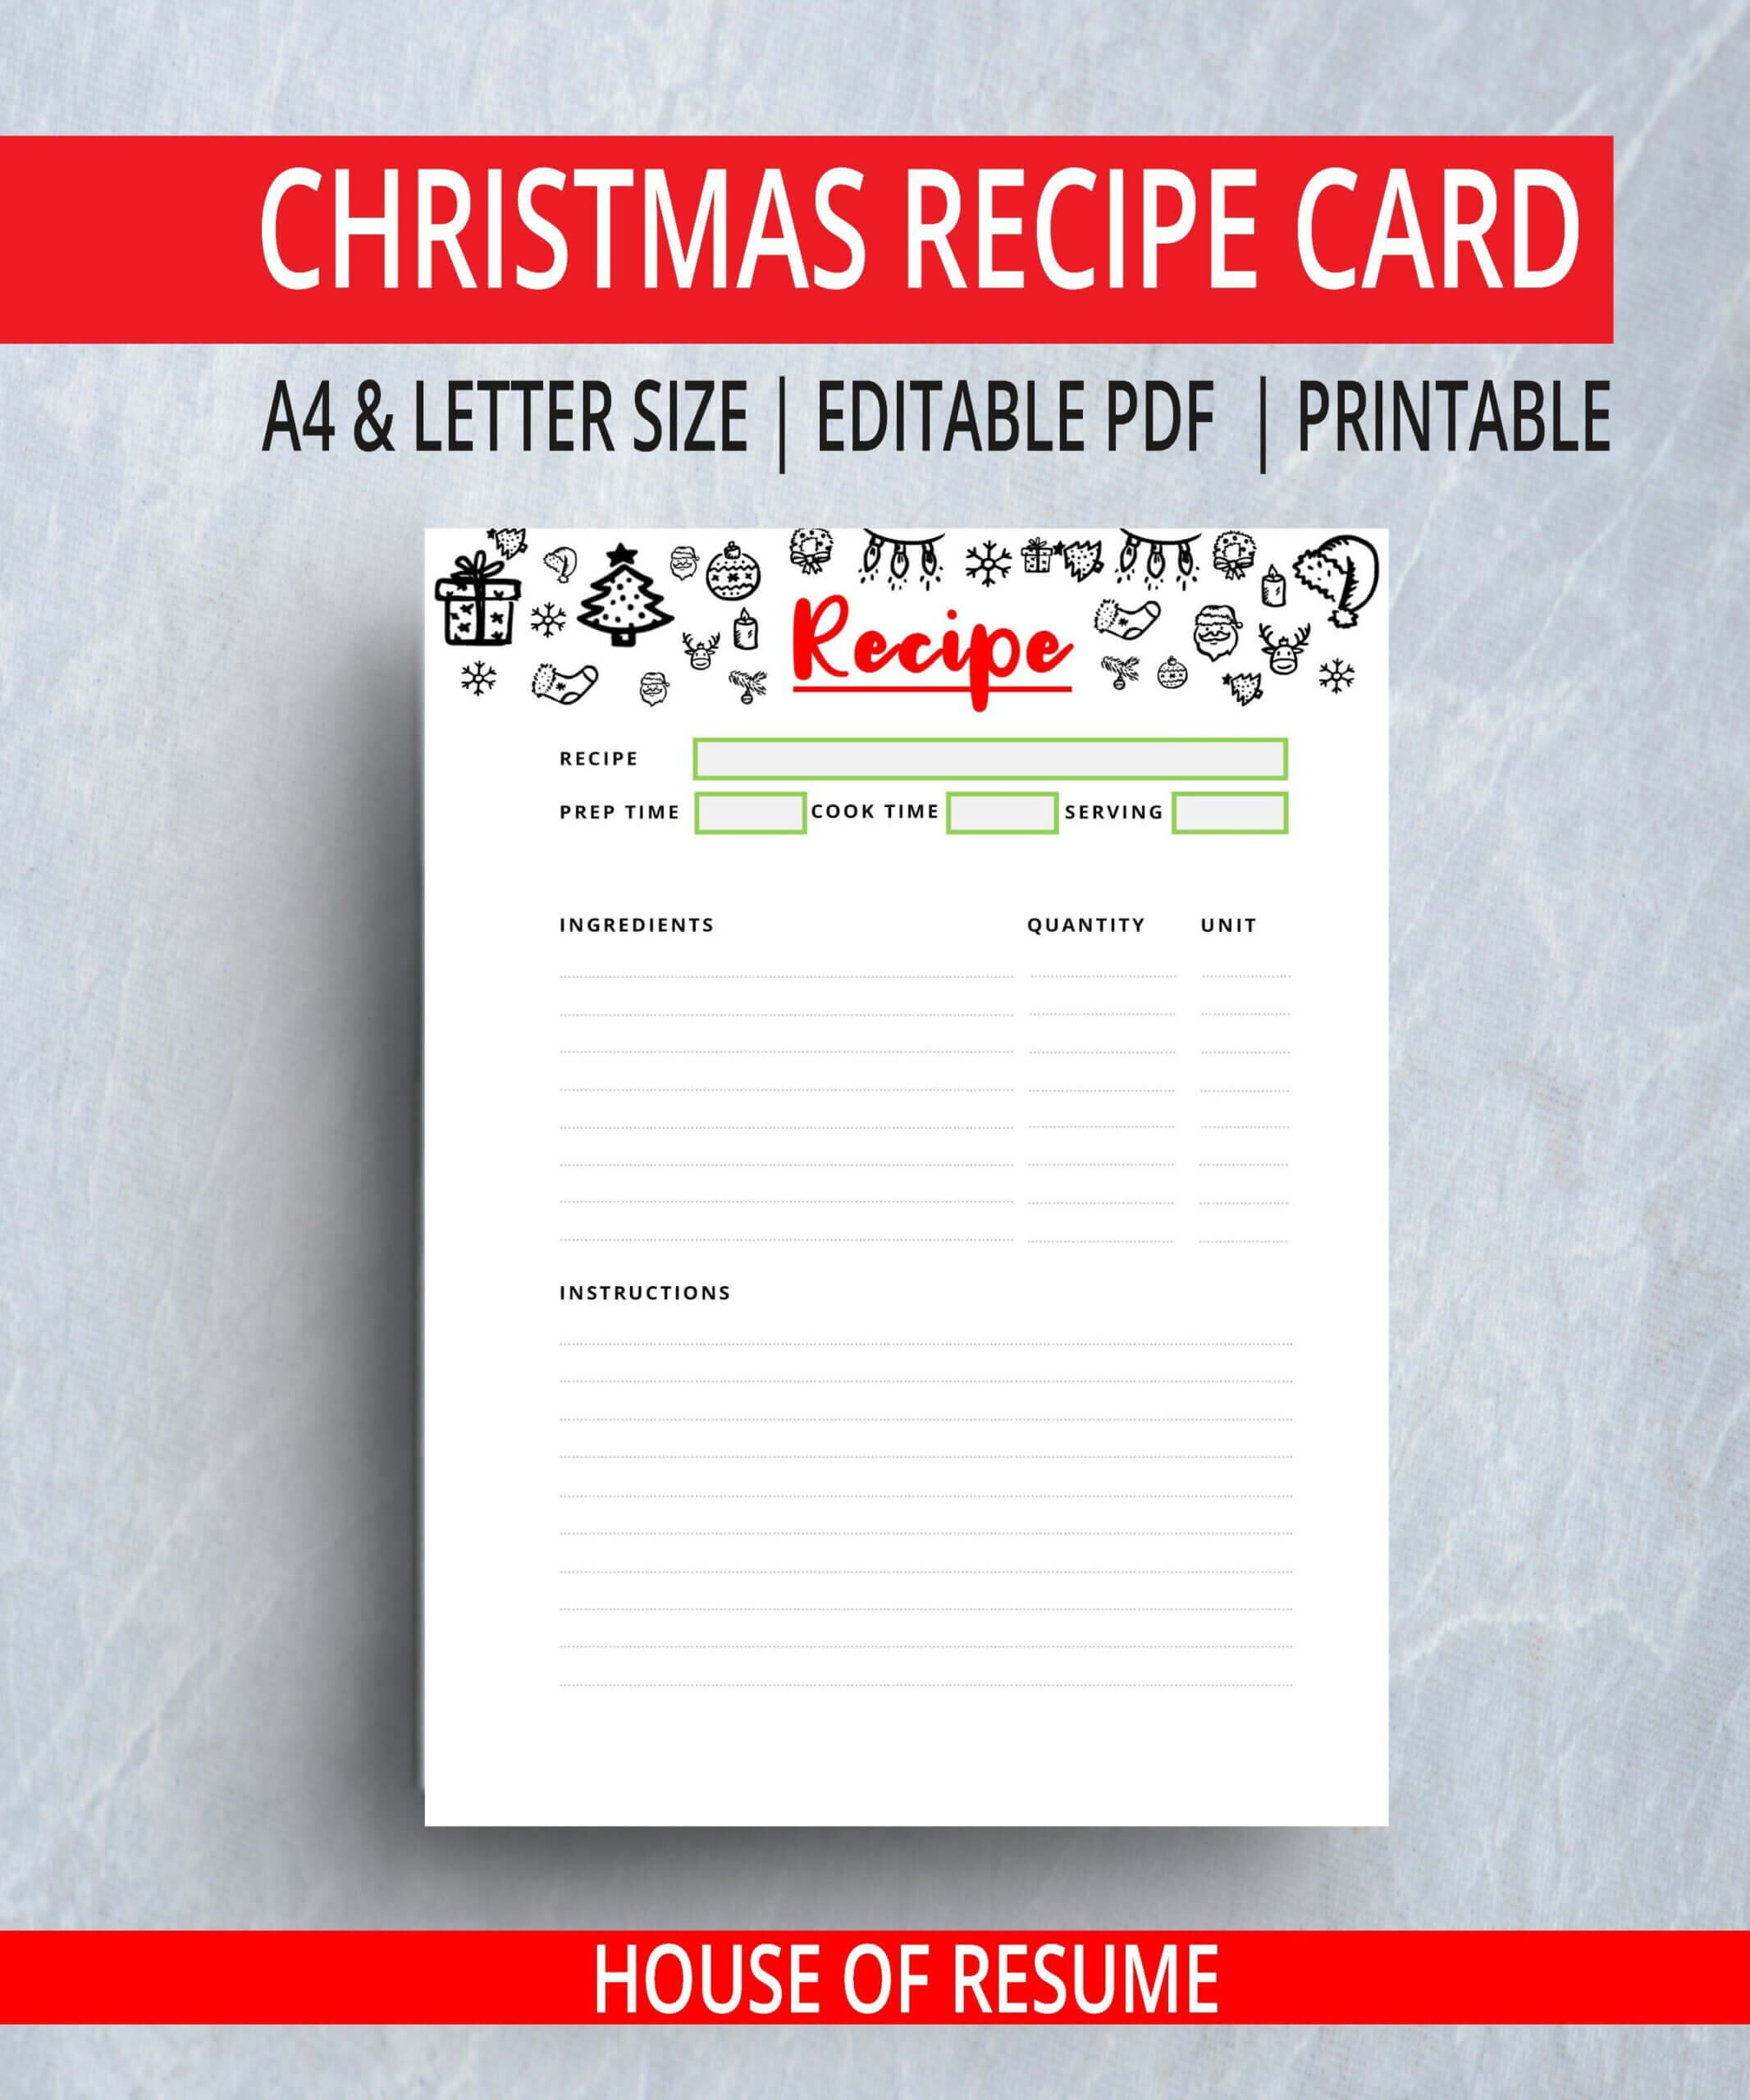 Beautiful Christmas Recipe Card Template Ideas Free Regarding Cookie Exchange Recipe Card Template